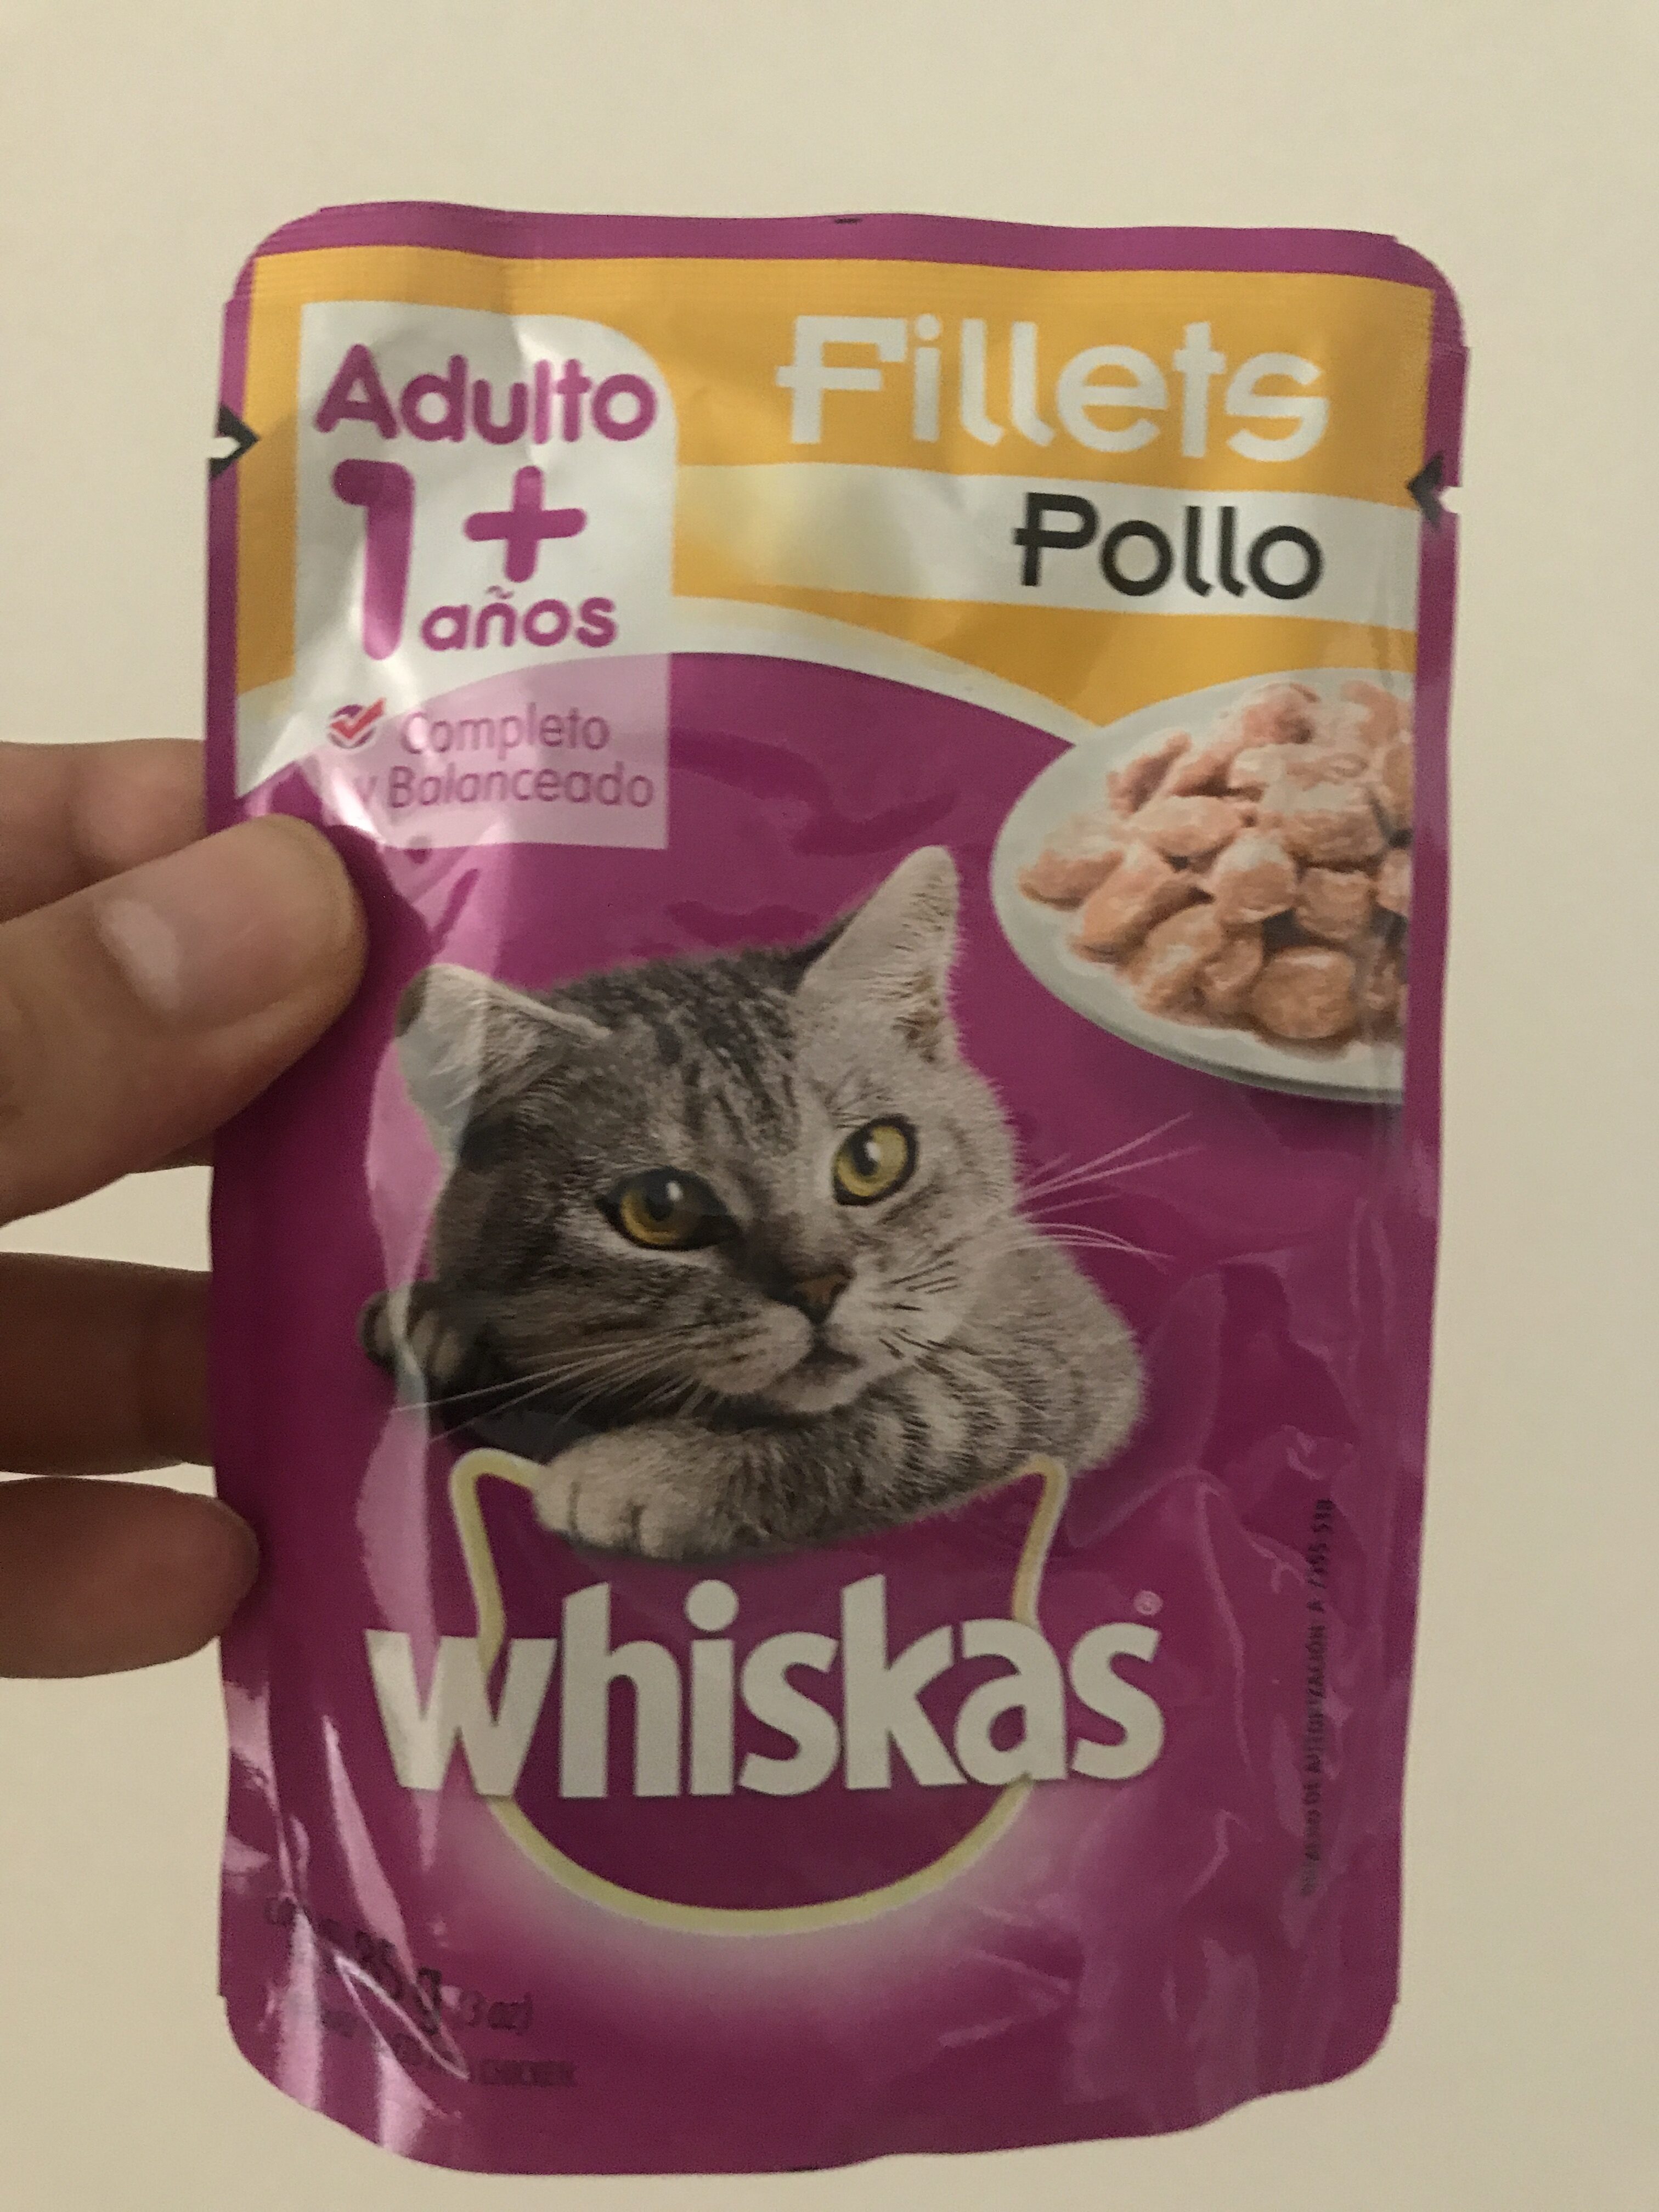 Fillets Pollo whiskas - Product - en